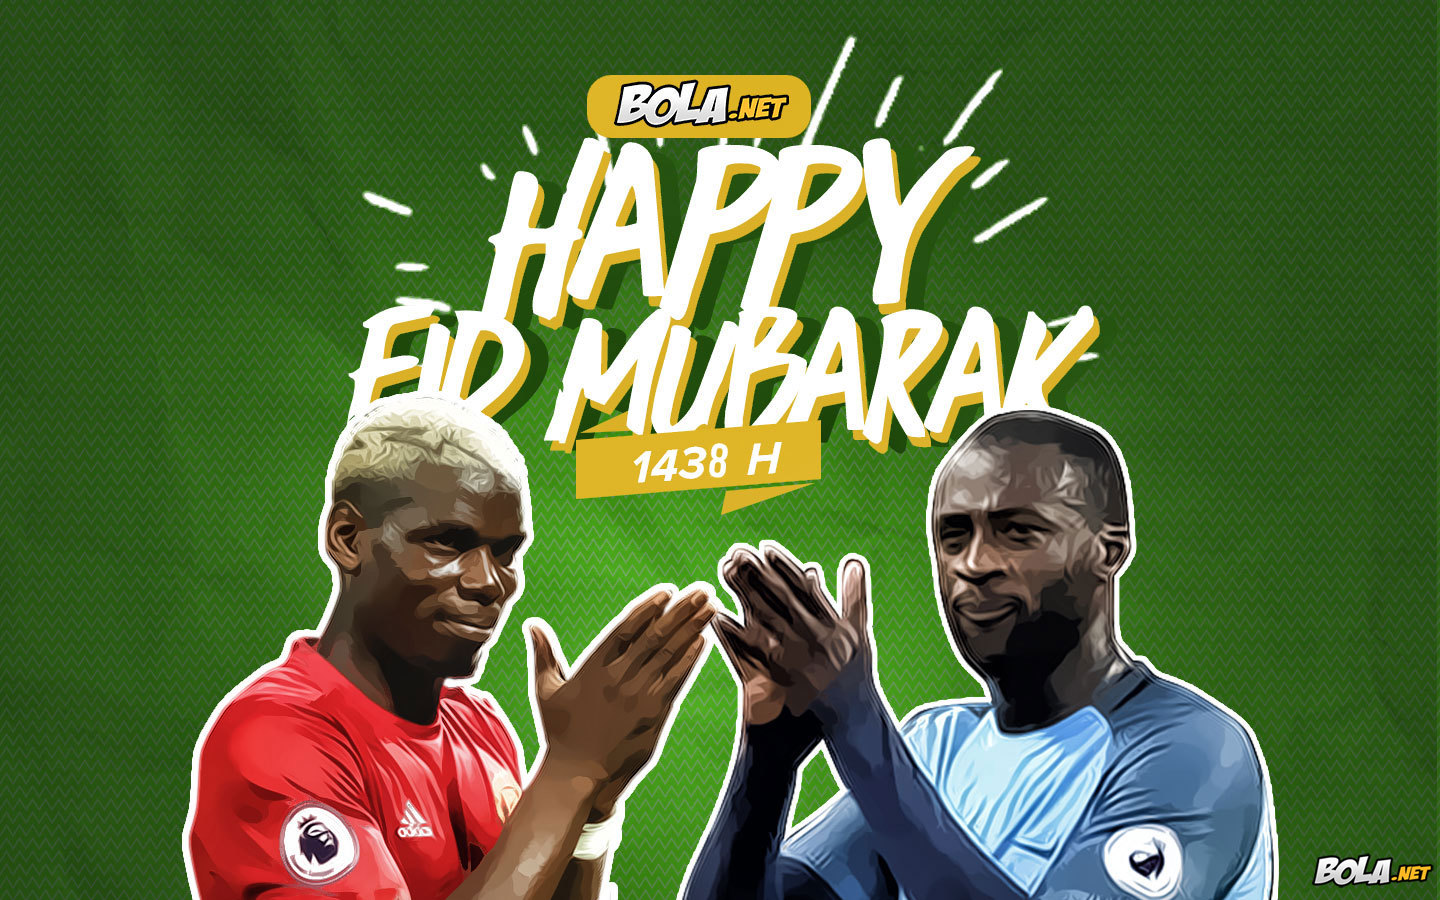 Deskripsi : Wallpaper Happy Eid Mubarak 1838 H, size: 1440x900